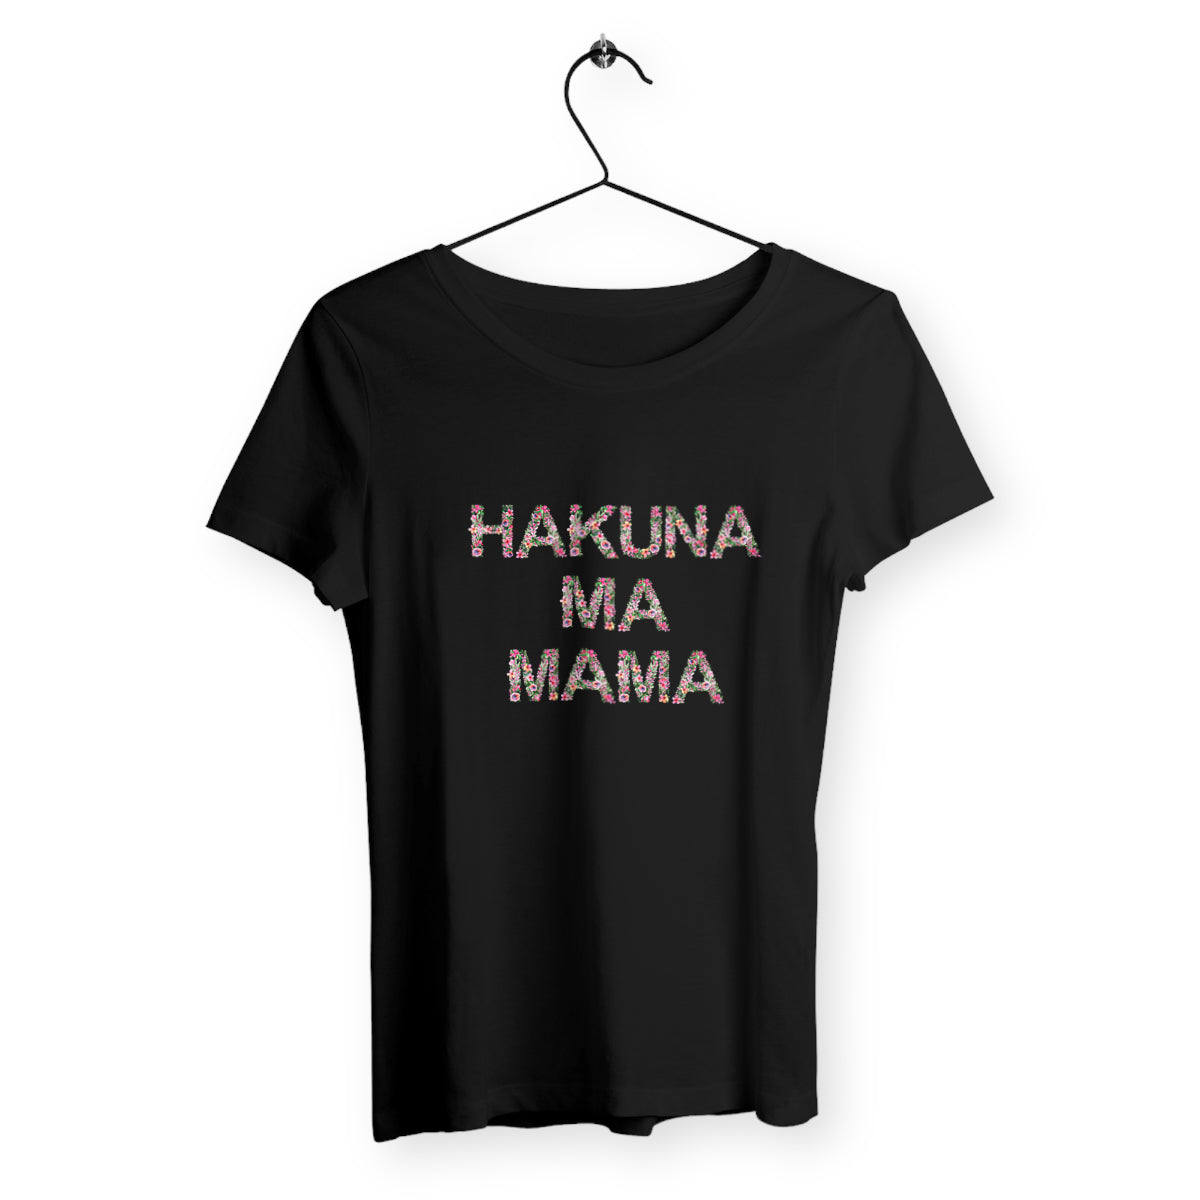 T-shirt femme hakuna ma mama